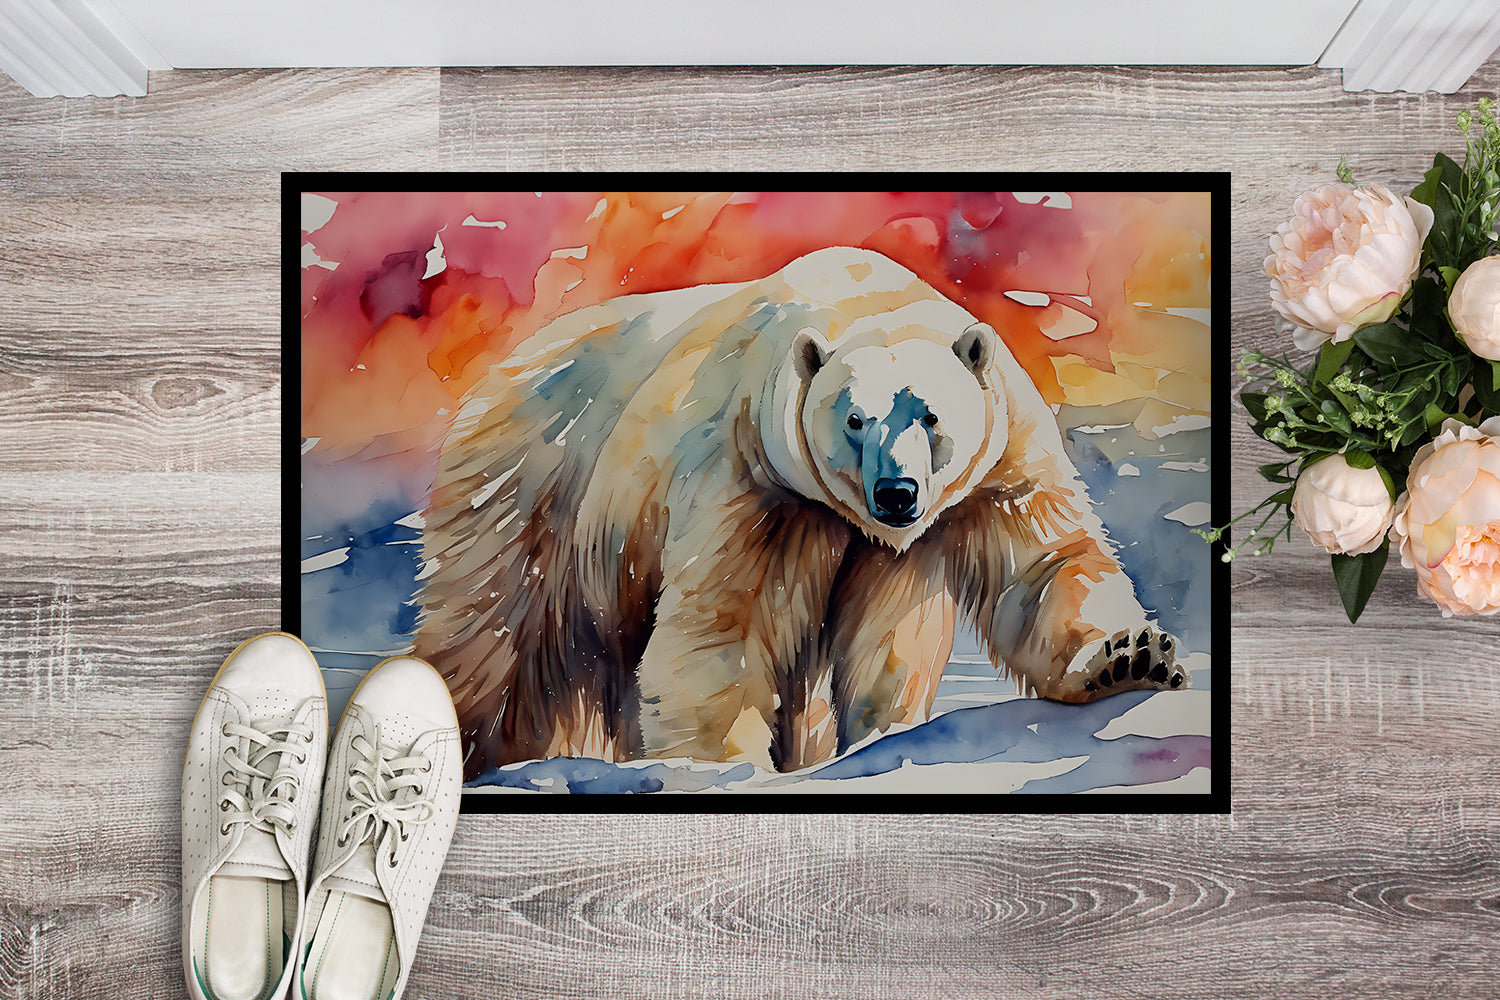 Buy this Polar Bear Doormat